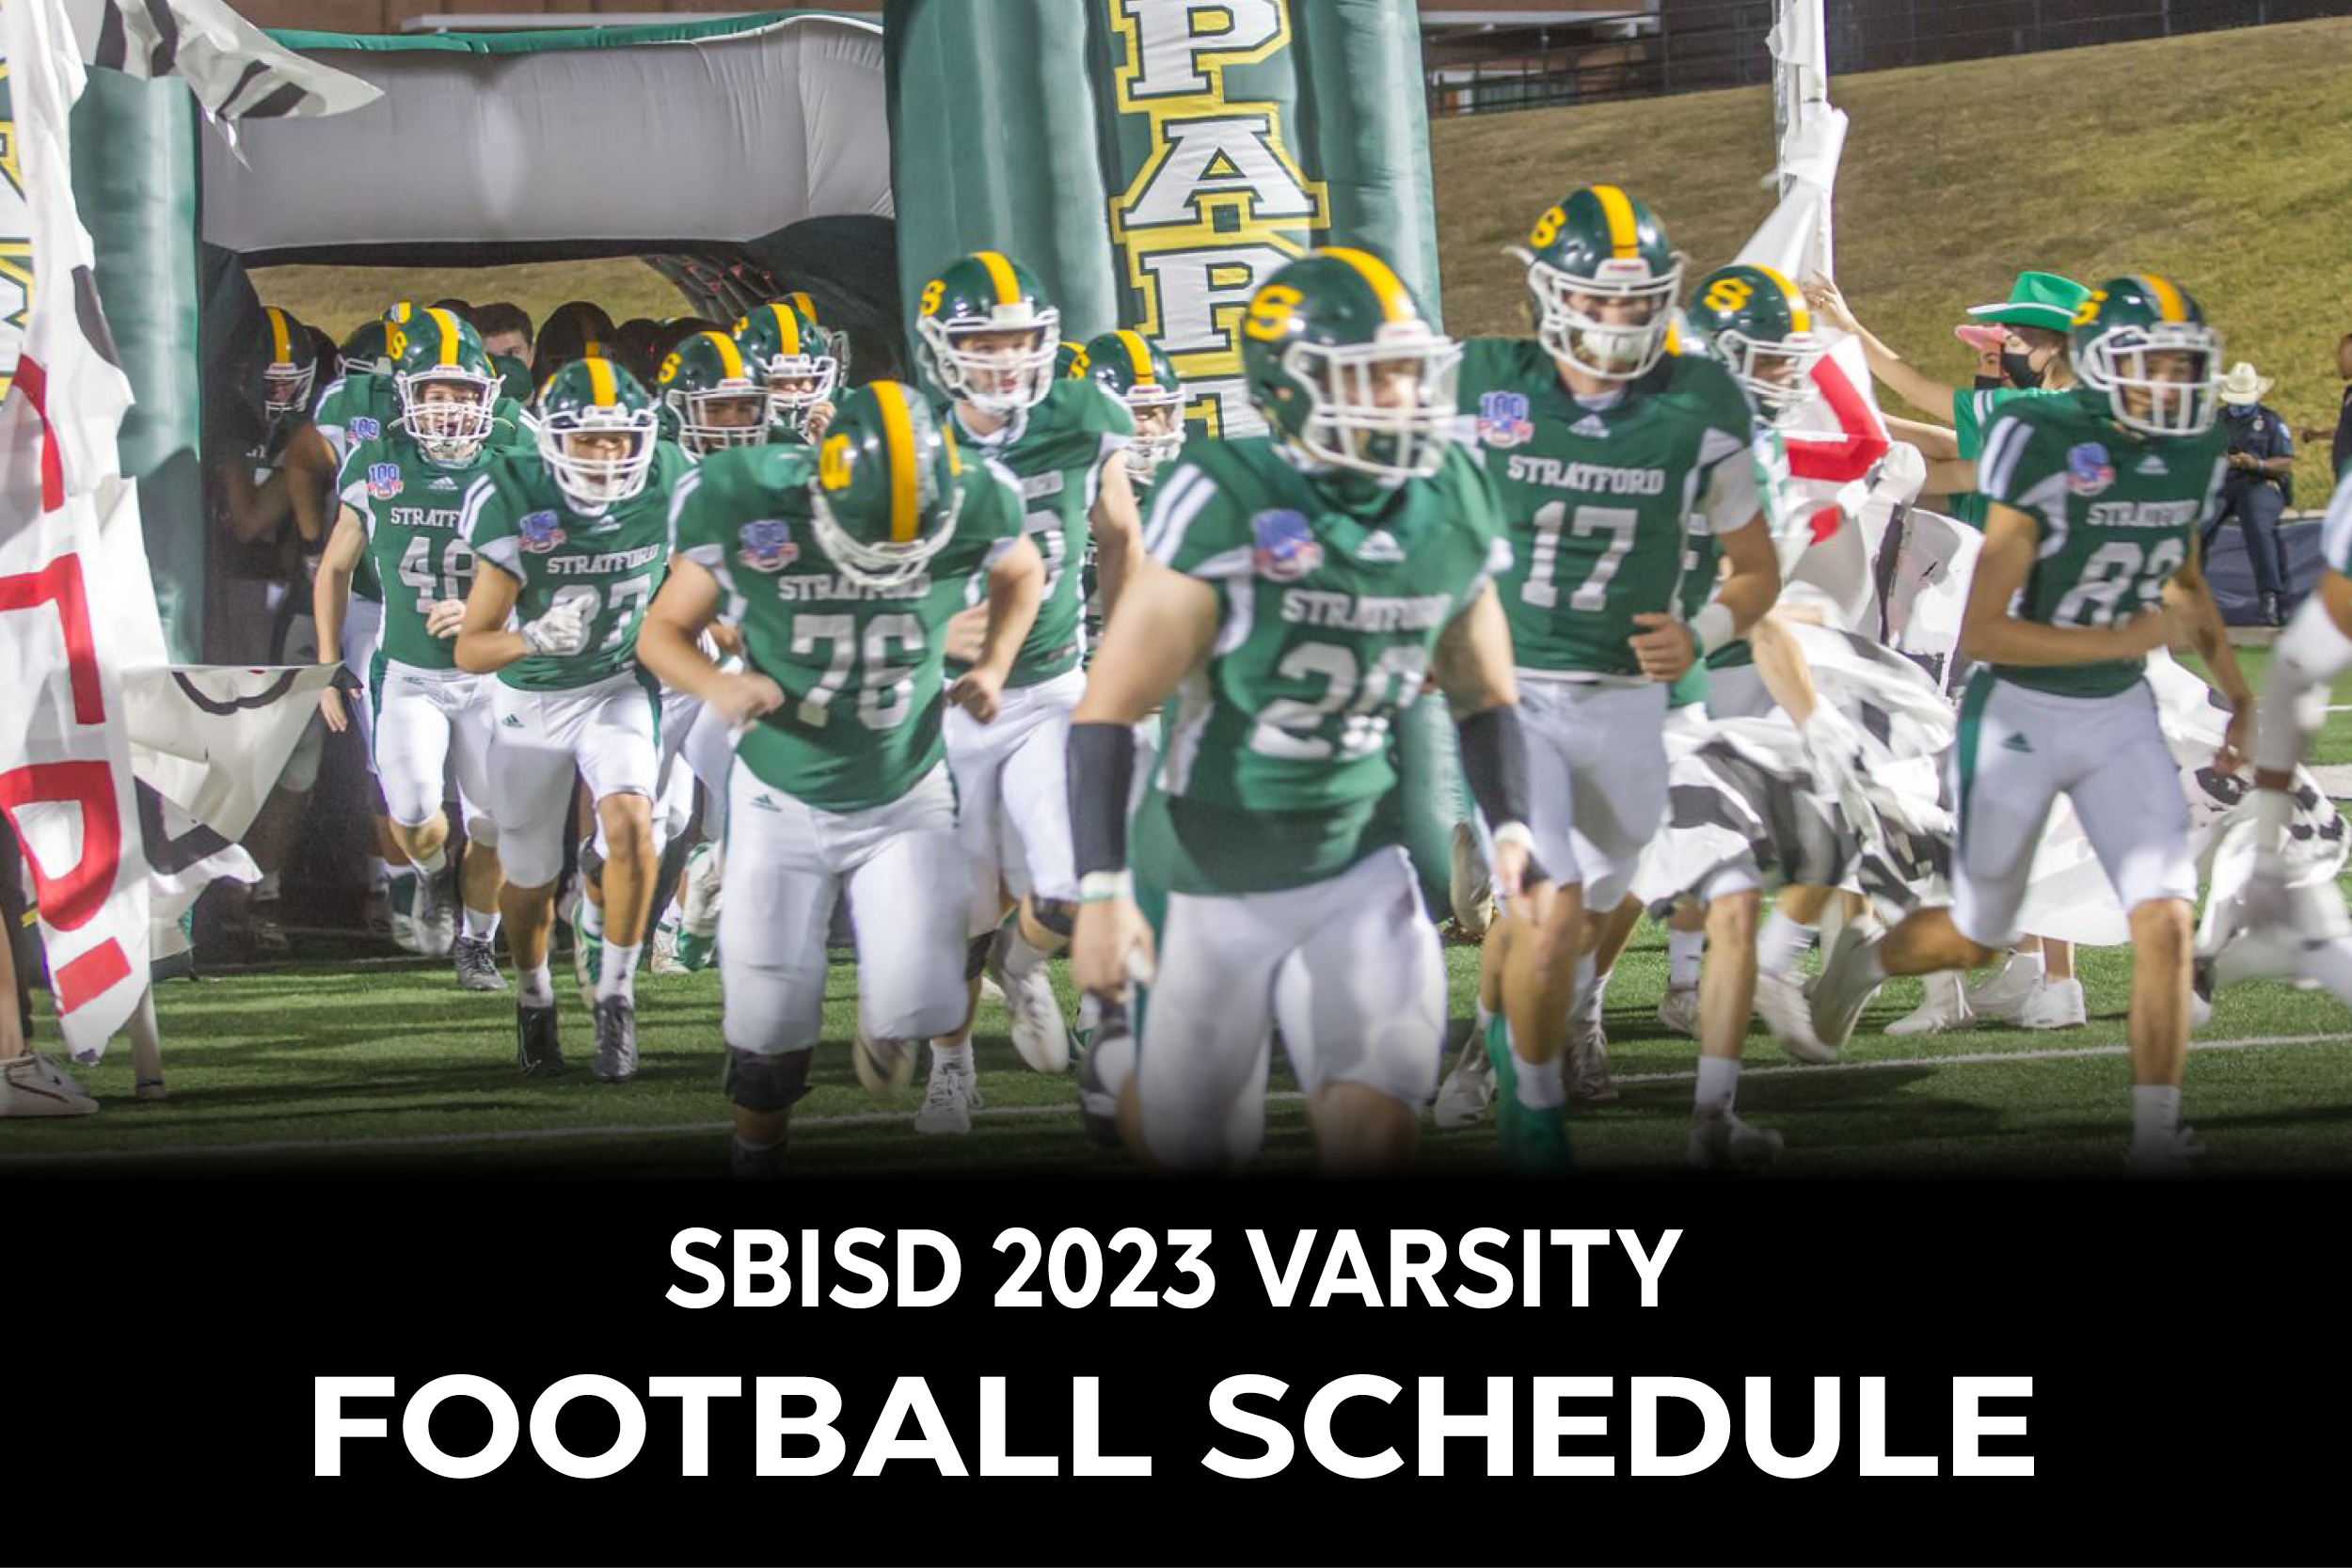 Spring Branch ISD Varsity 2023 Football Schedule